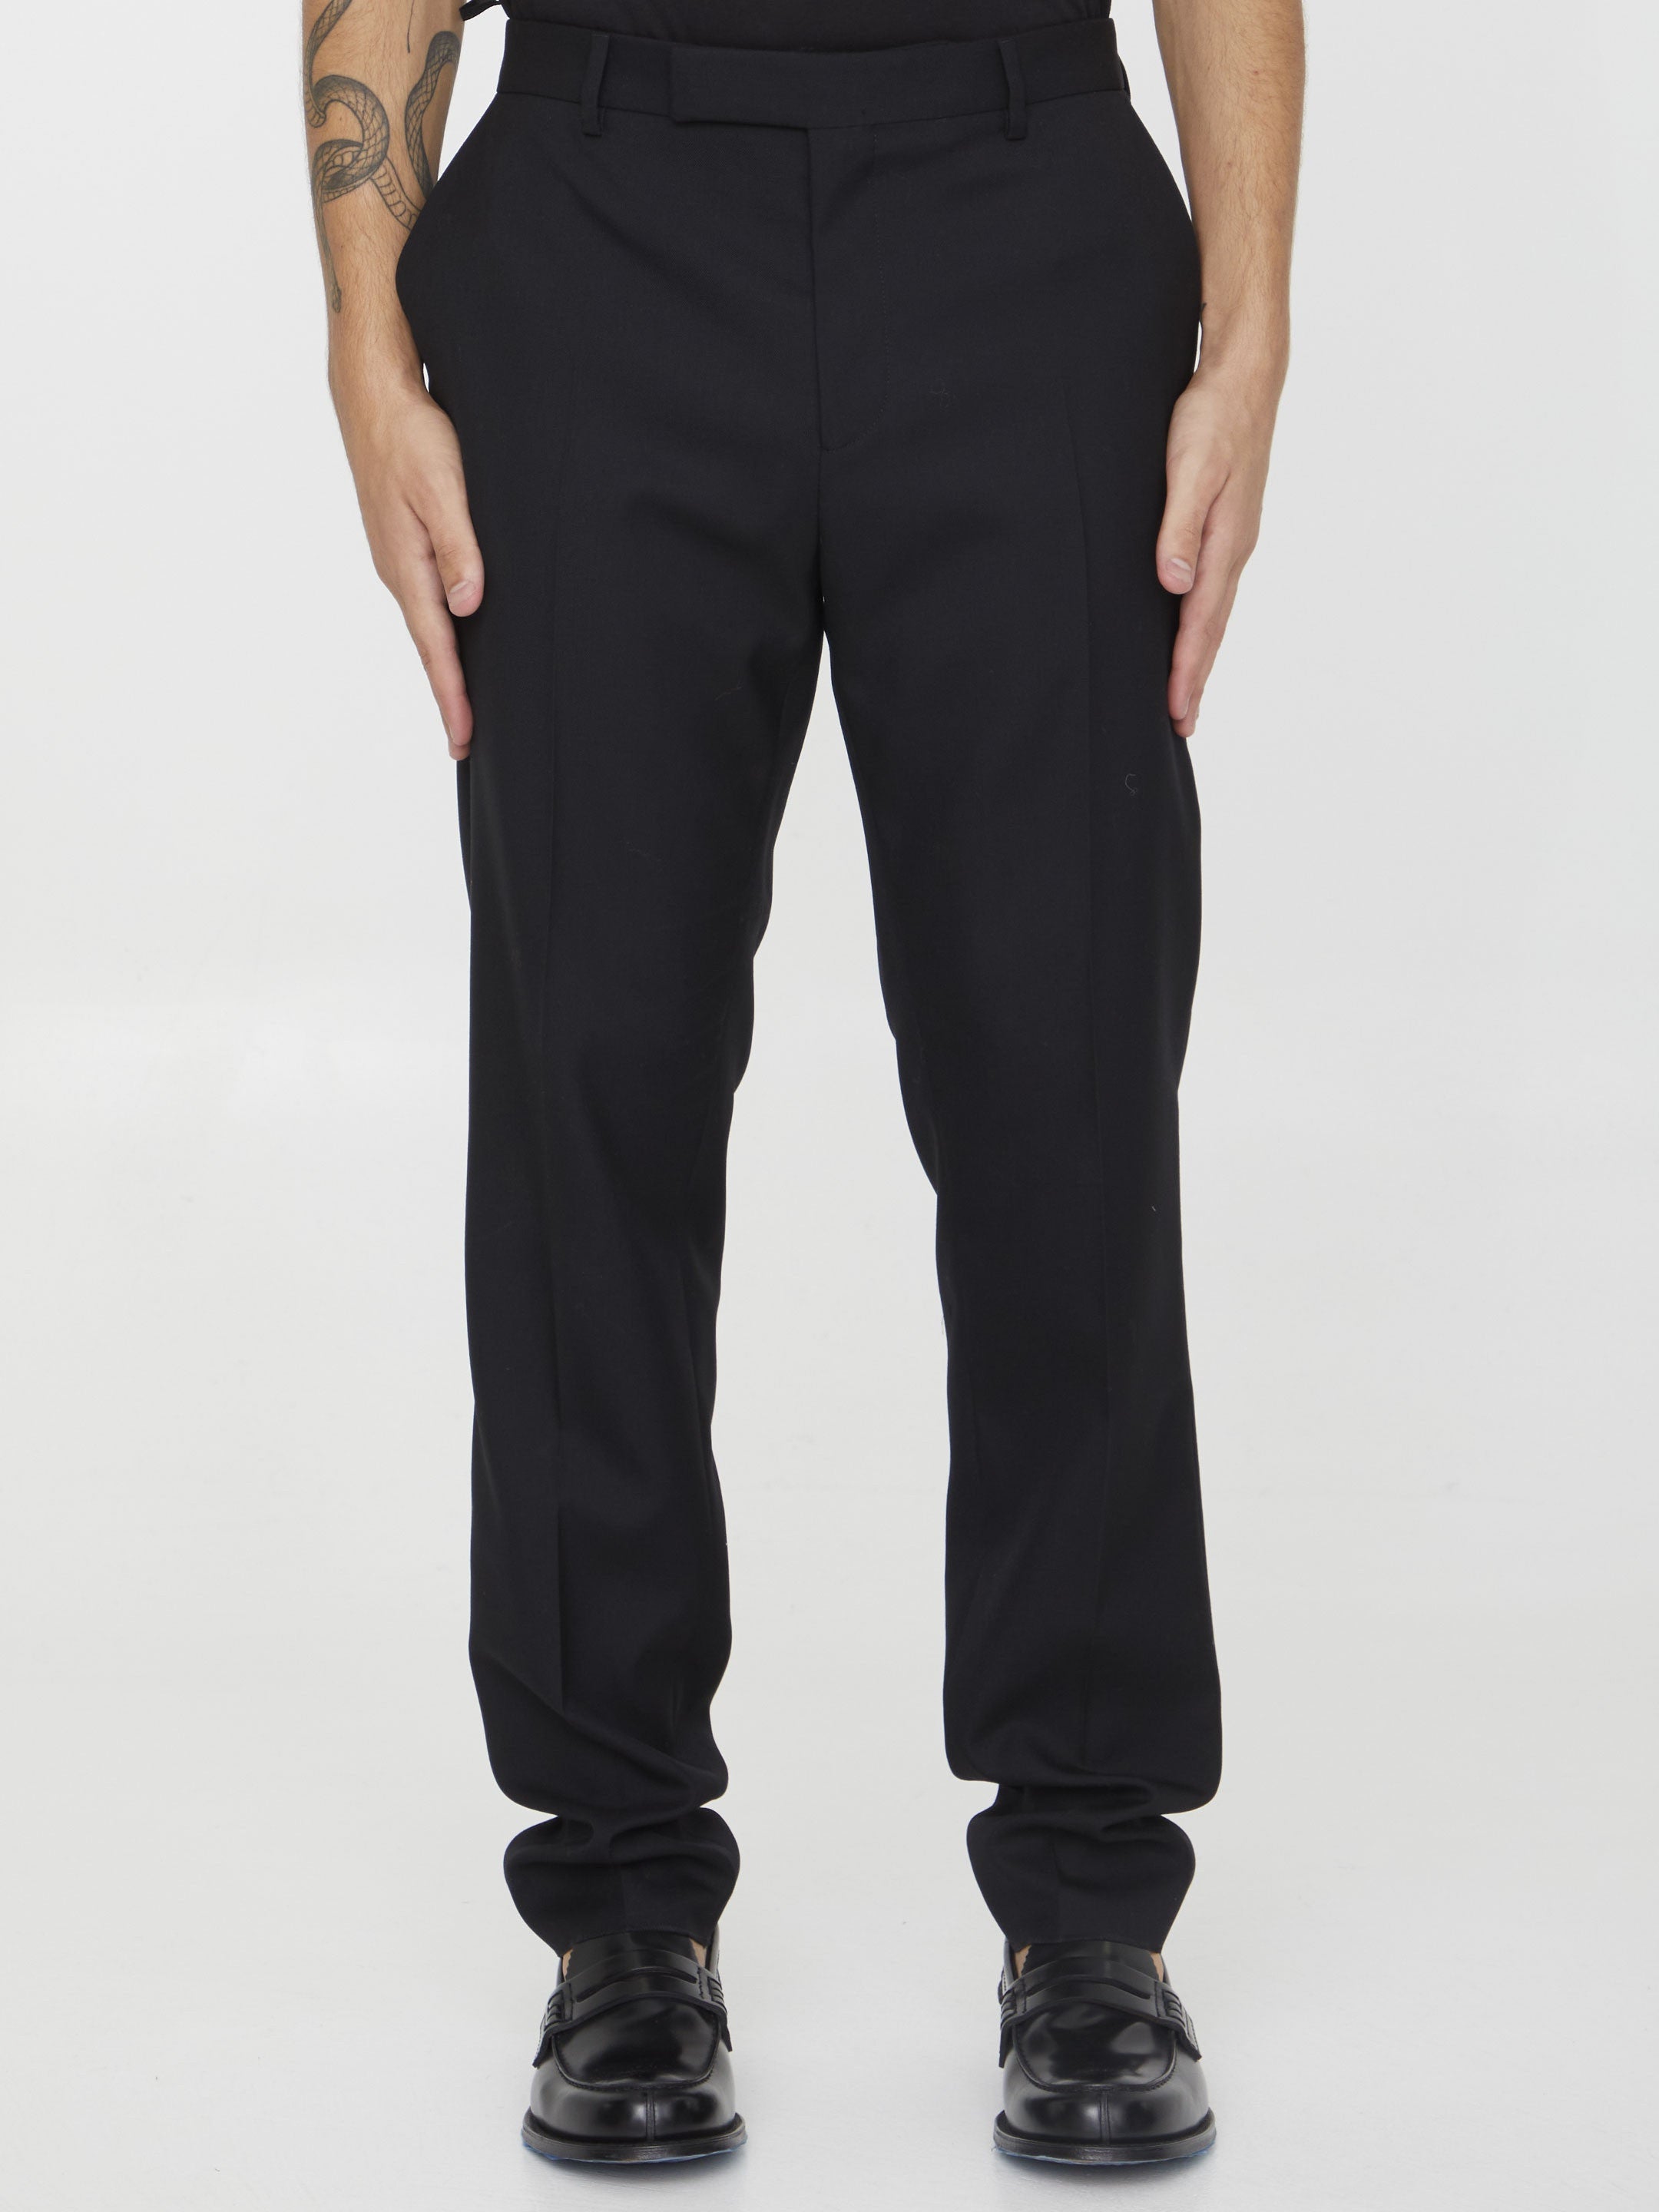 CELINE-OUTLET-SALE-Wool-gabardine-trousers-Hosen-50-BLACK-ARCHIVE-COLLECTION.jpg